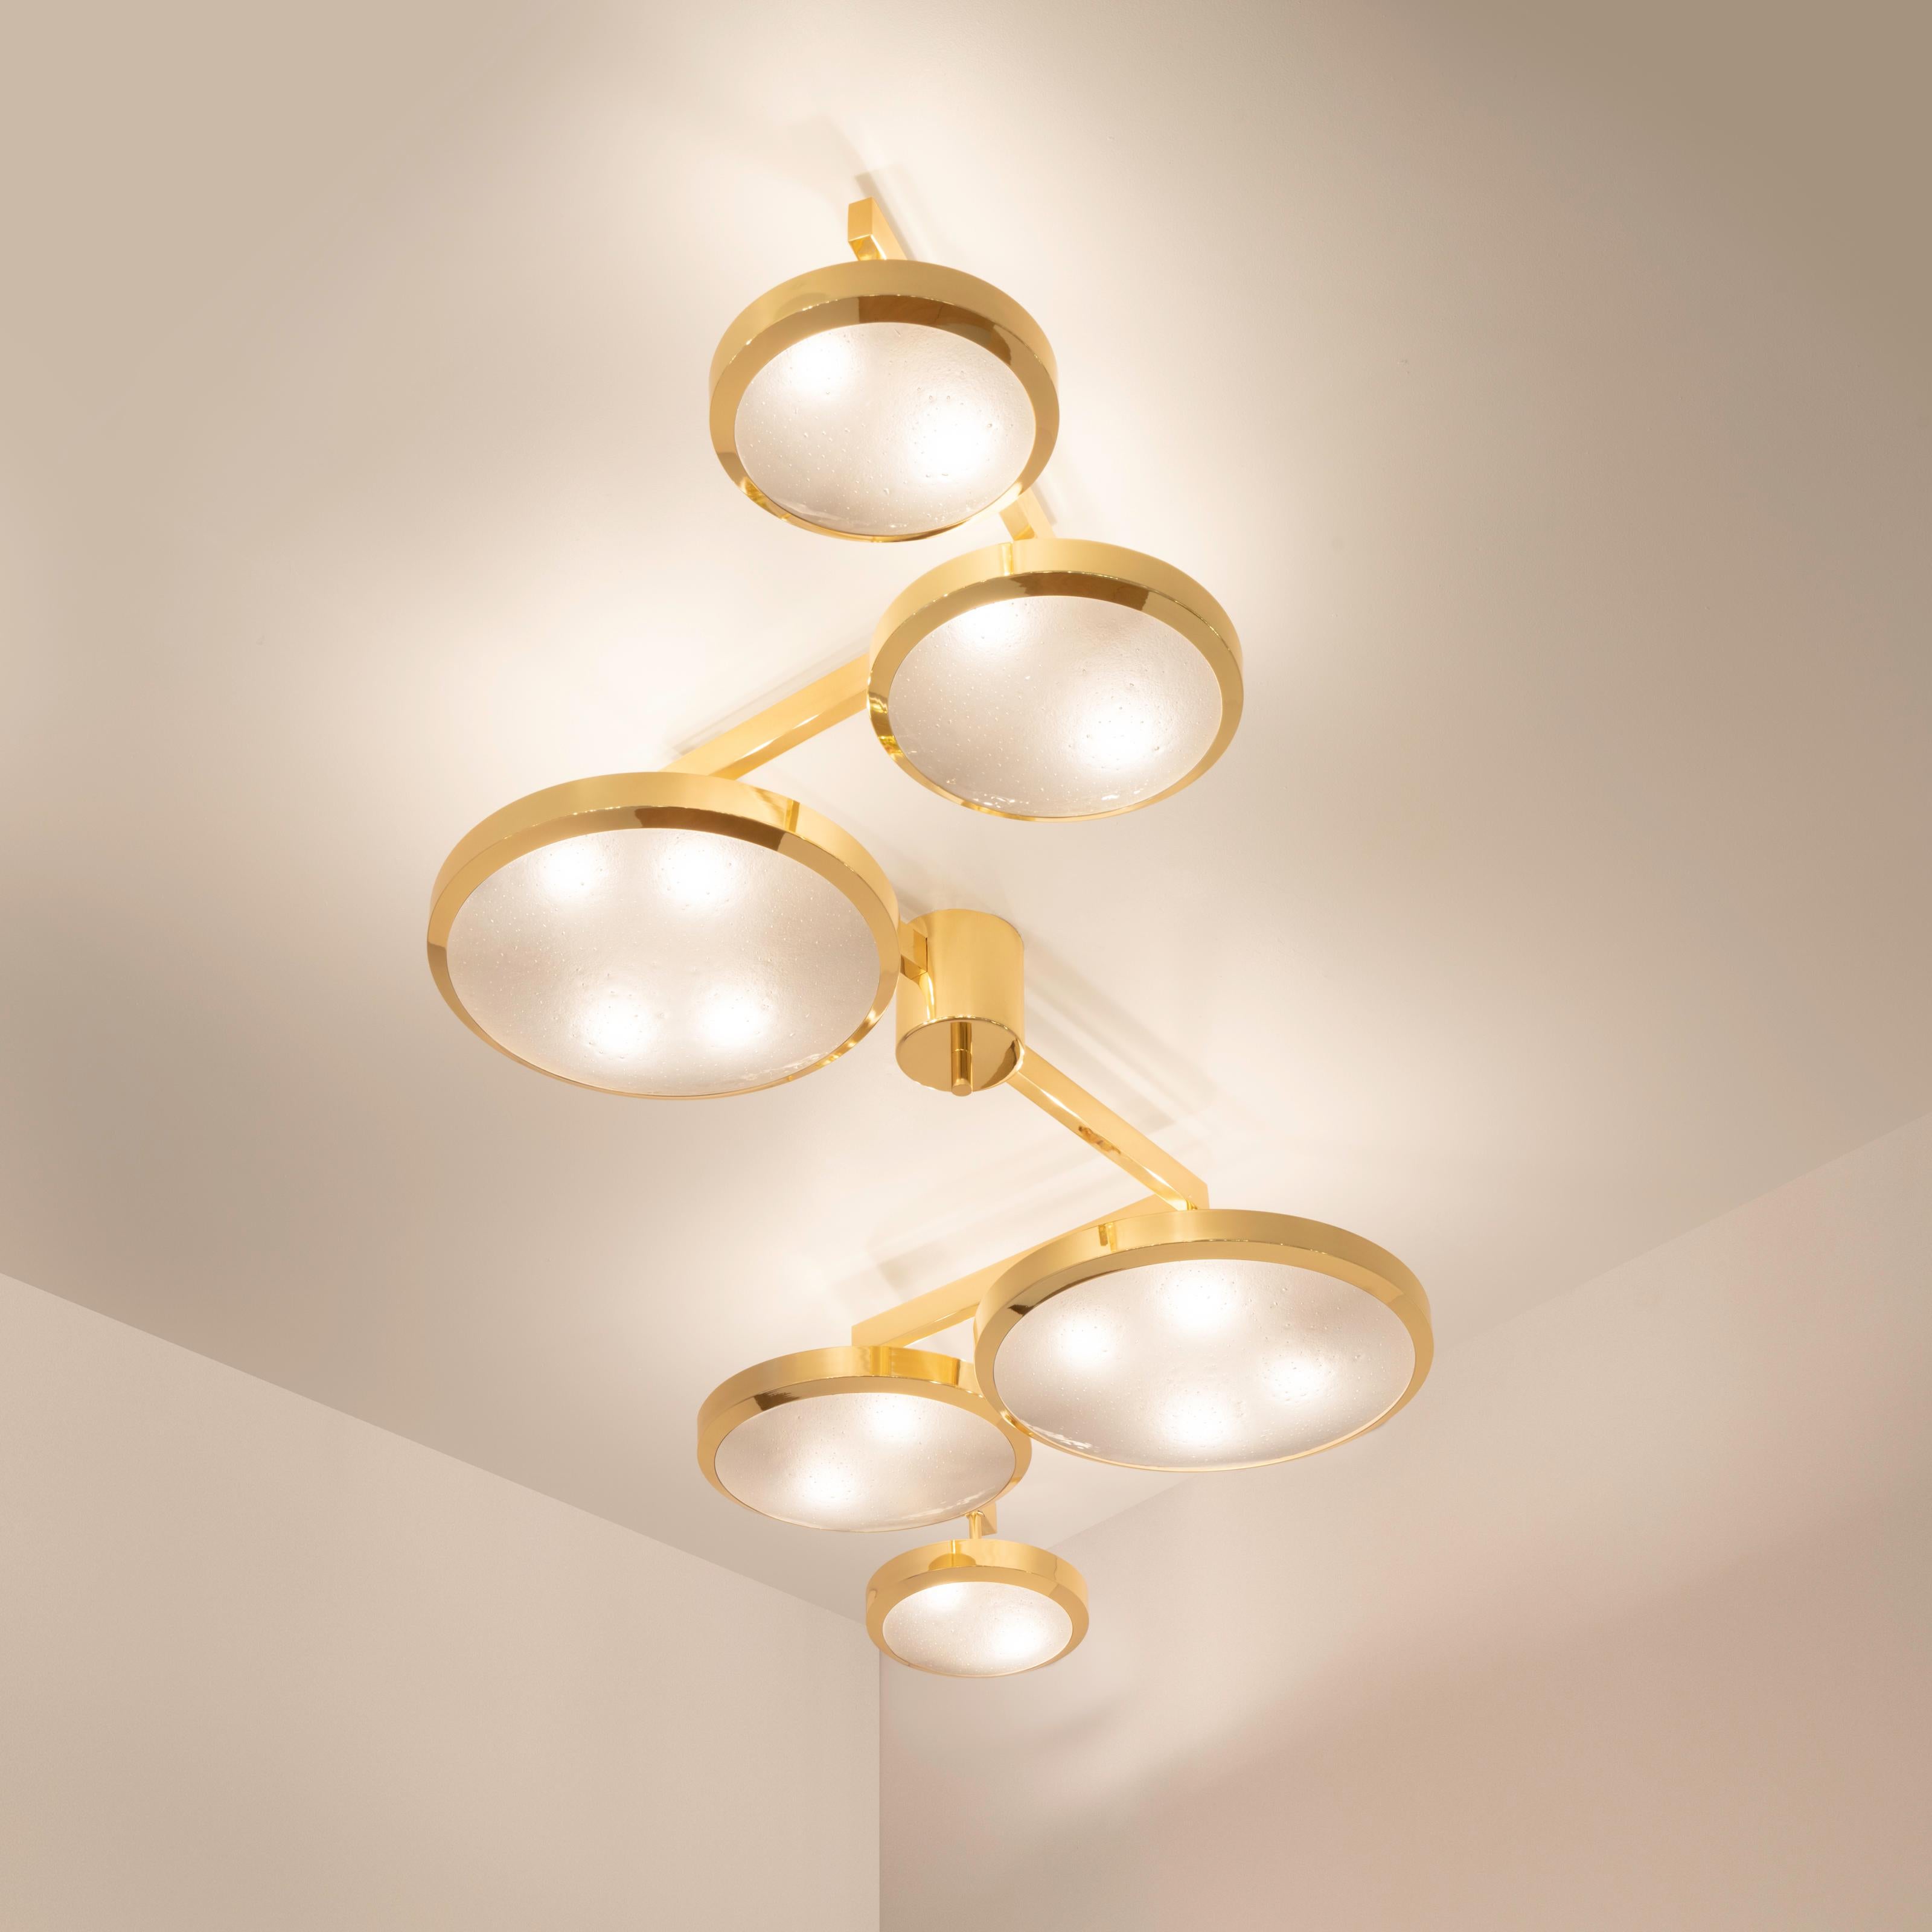 Italian Geometria Sospesa Ceiling Light by Gaspare Asaro-Bronze Finish For Sale